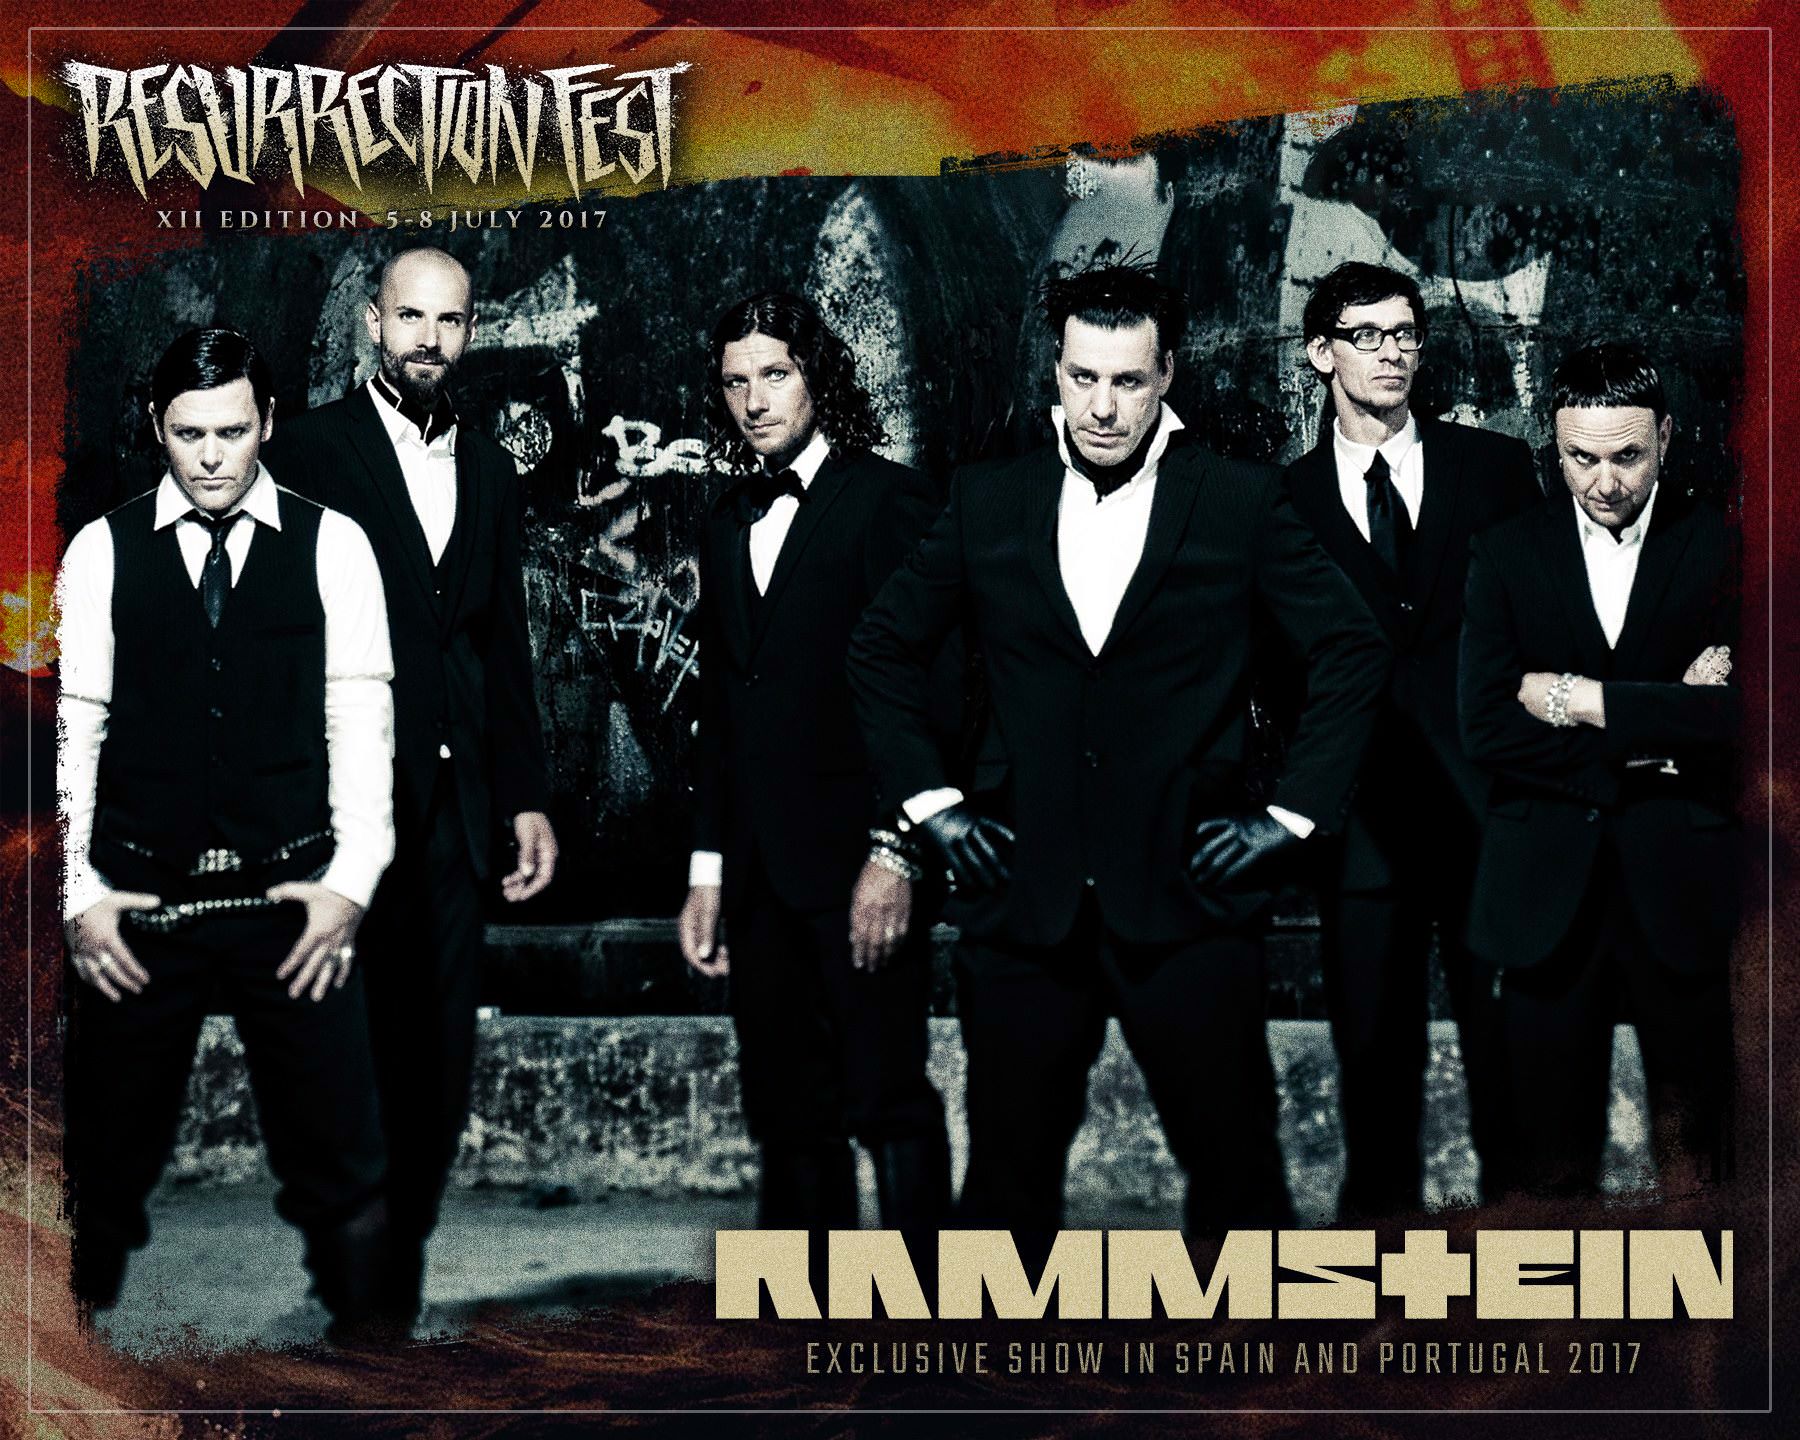 Слушать музыку рамштайн все. Rammstein. Группа Rammstein. Rammstein обложка. Обложки к группе Rammstein.